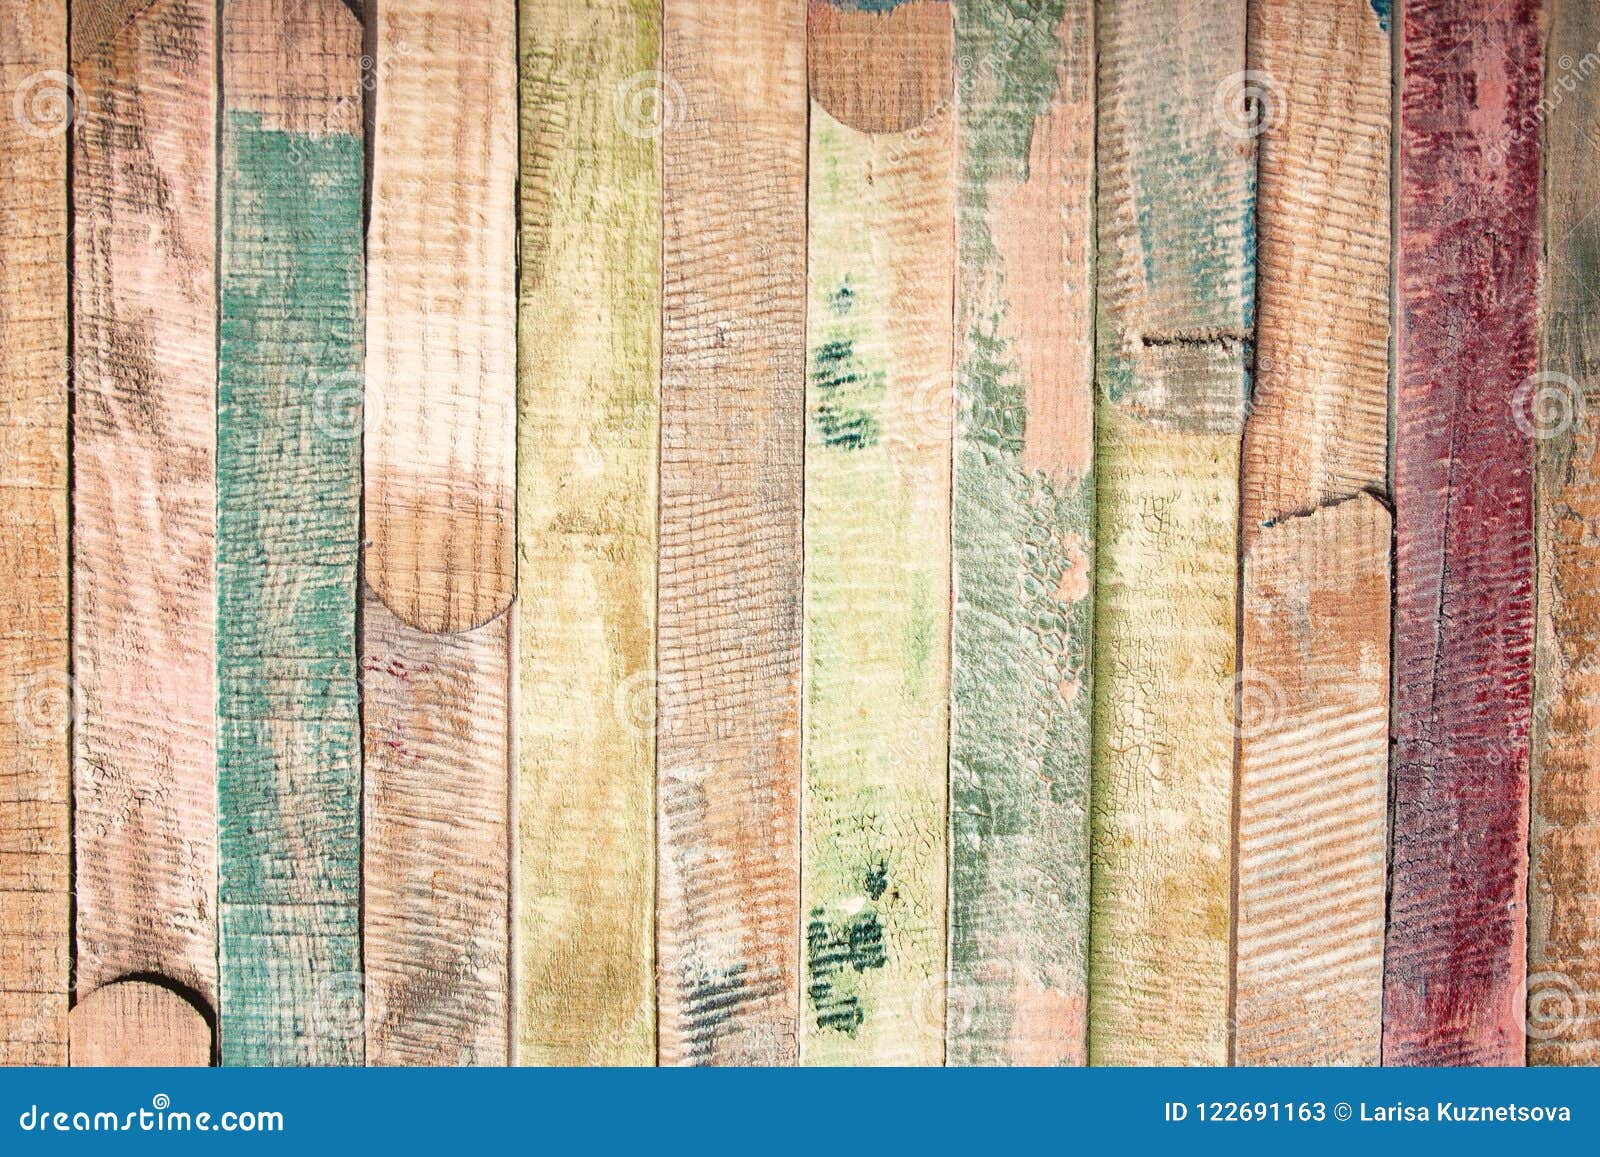 Colored wood background stock image. Image of lumber - 122691163